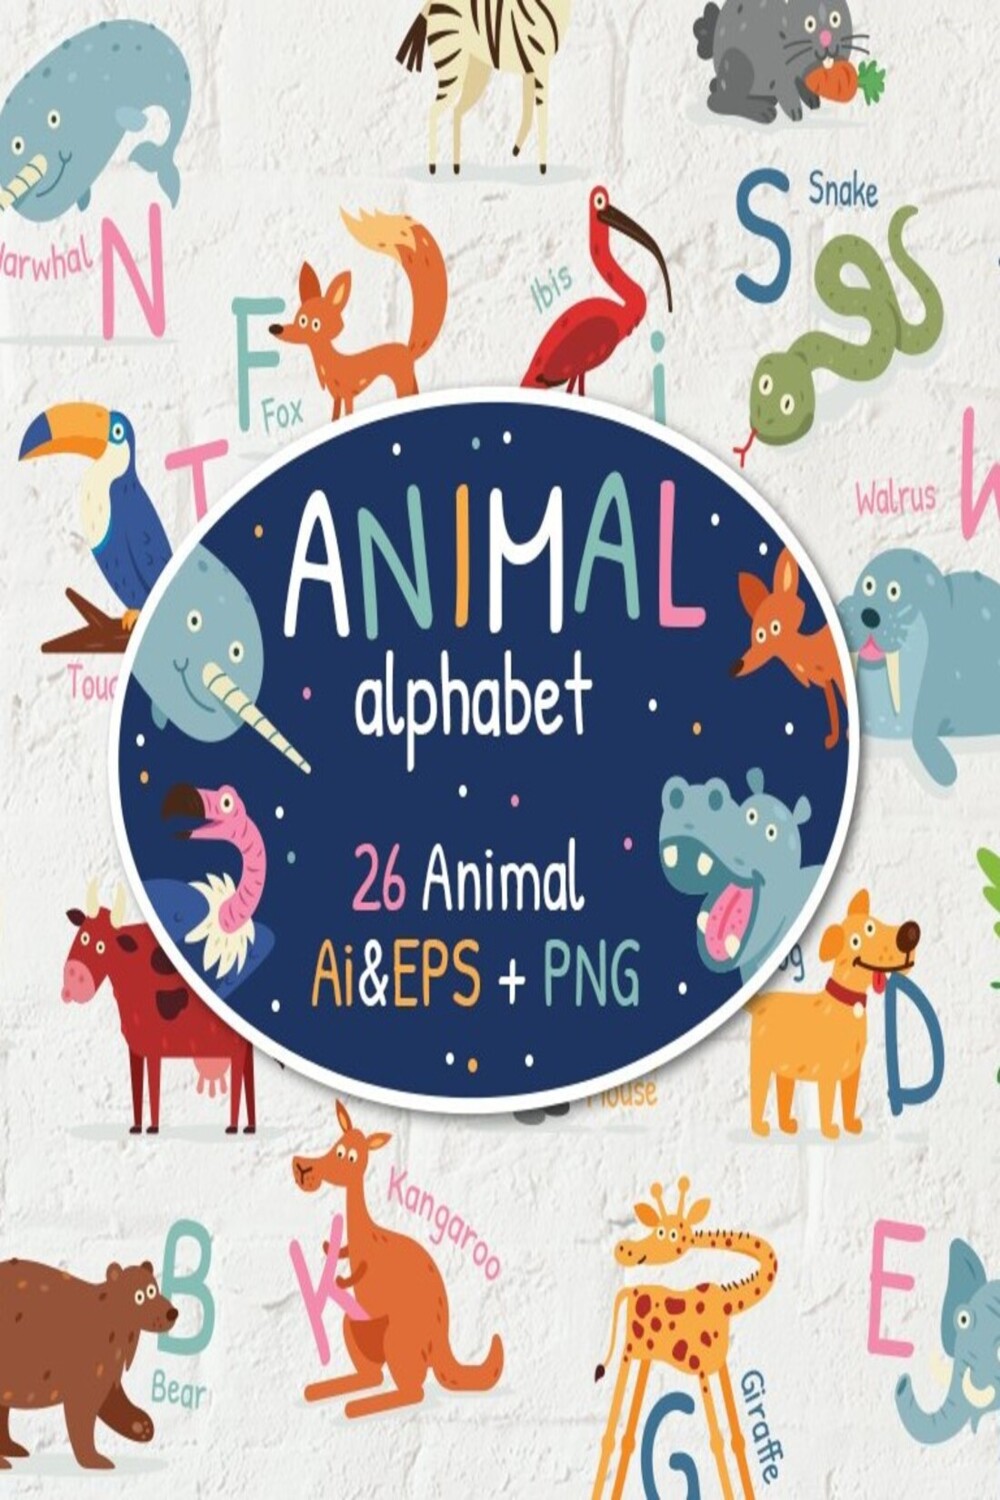 Animal Alphabet - pinterest image preview.